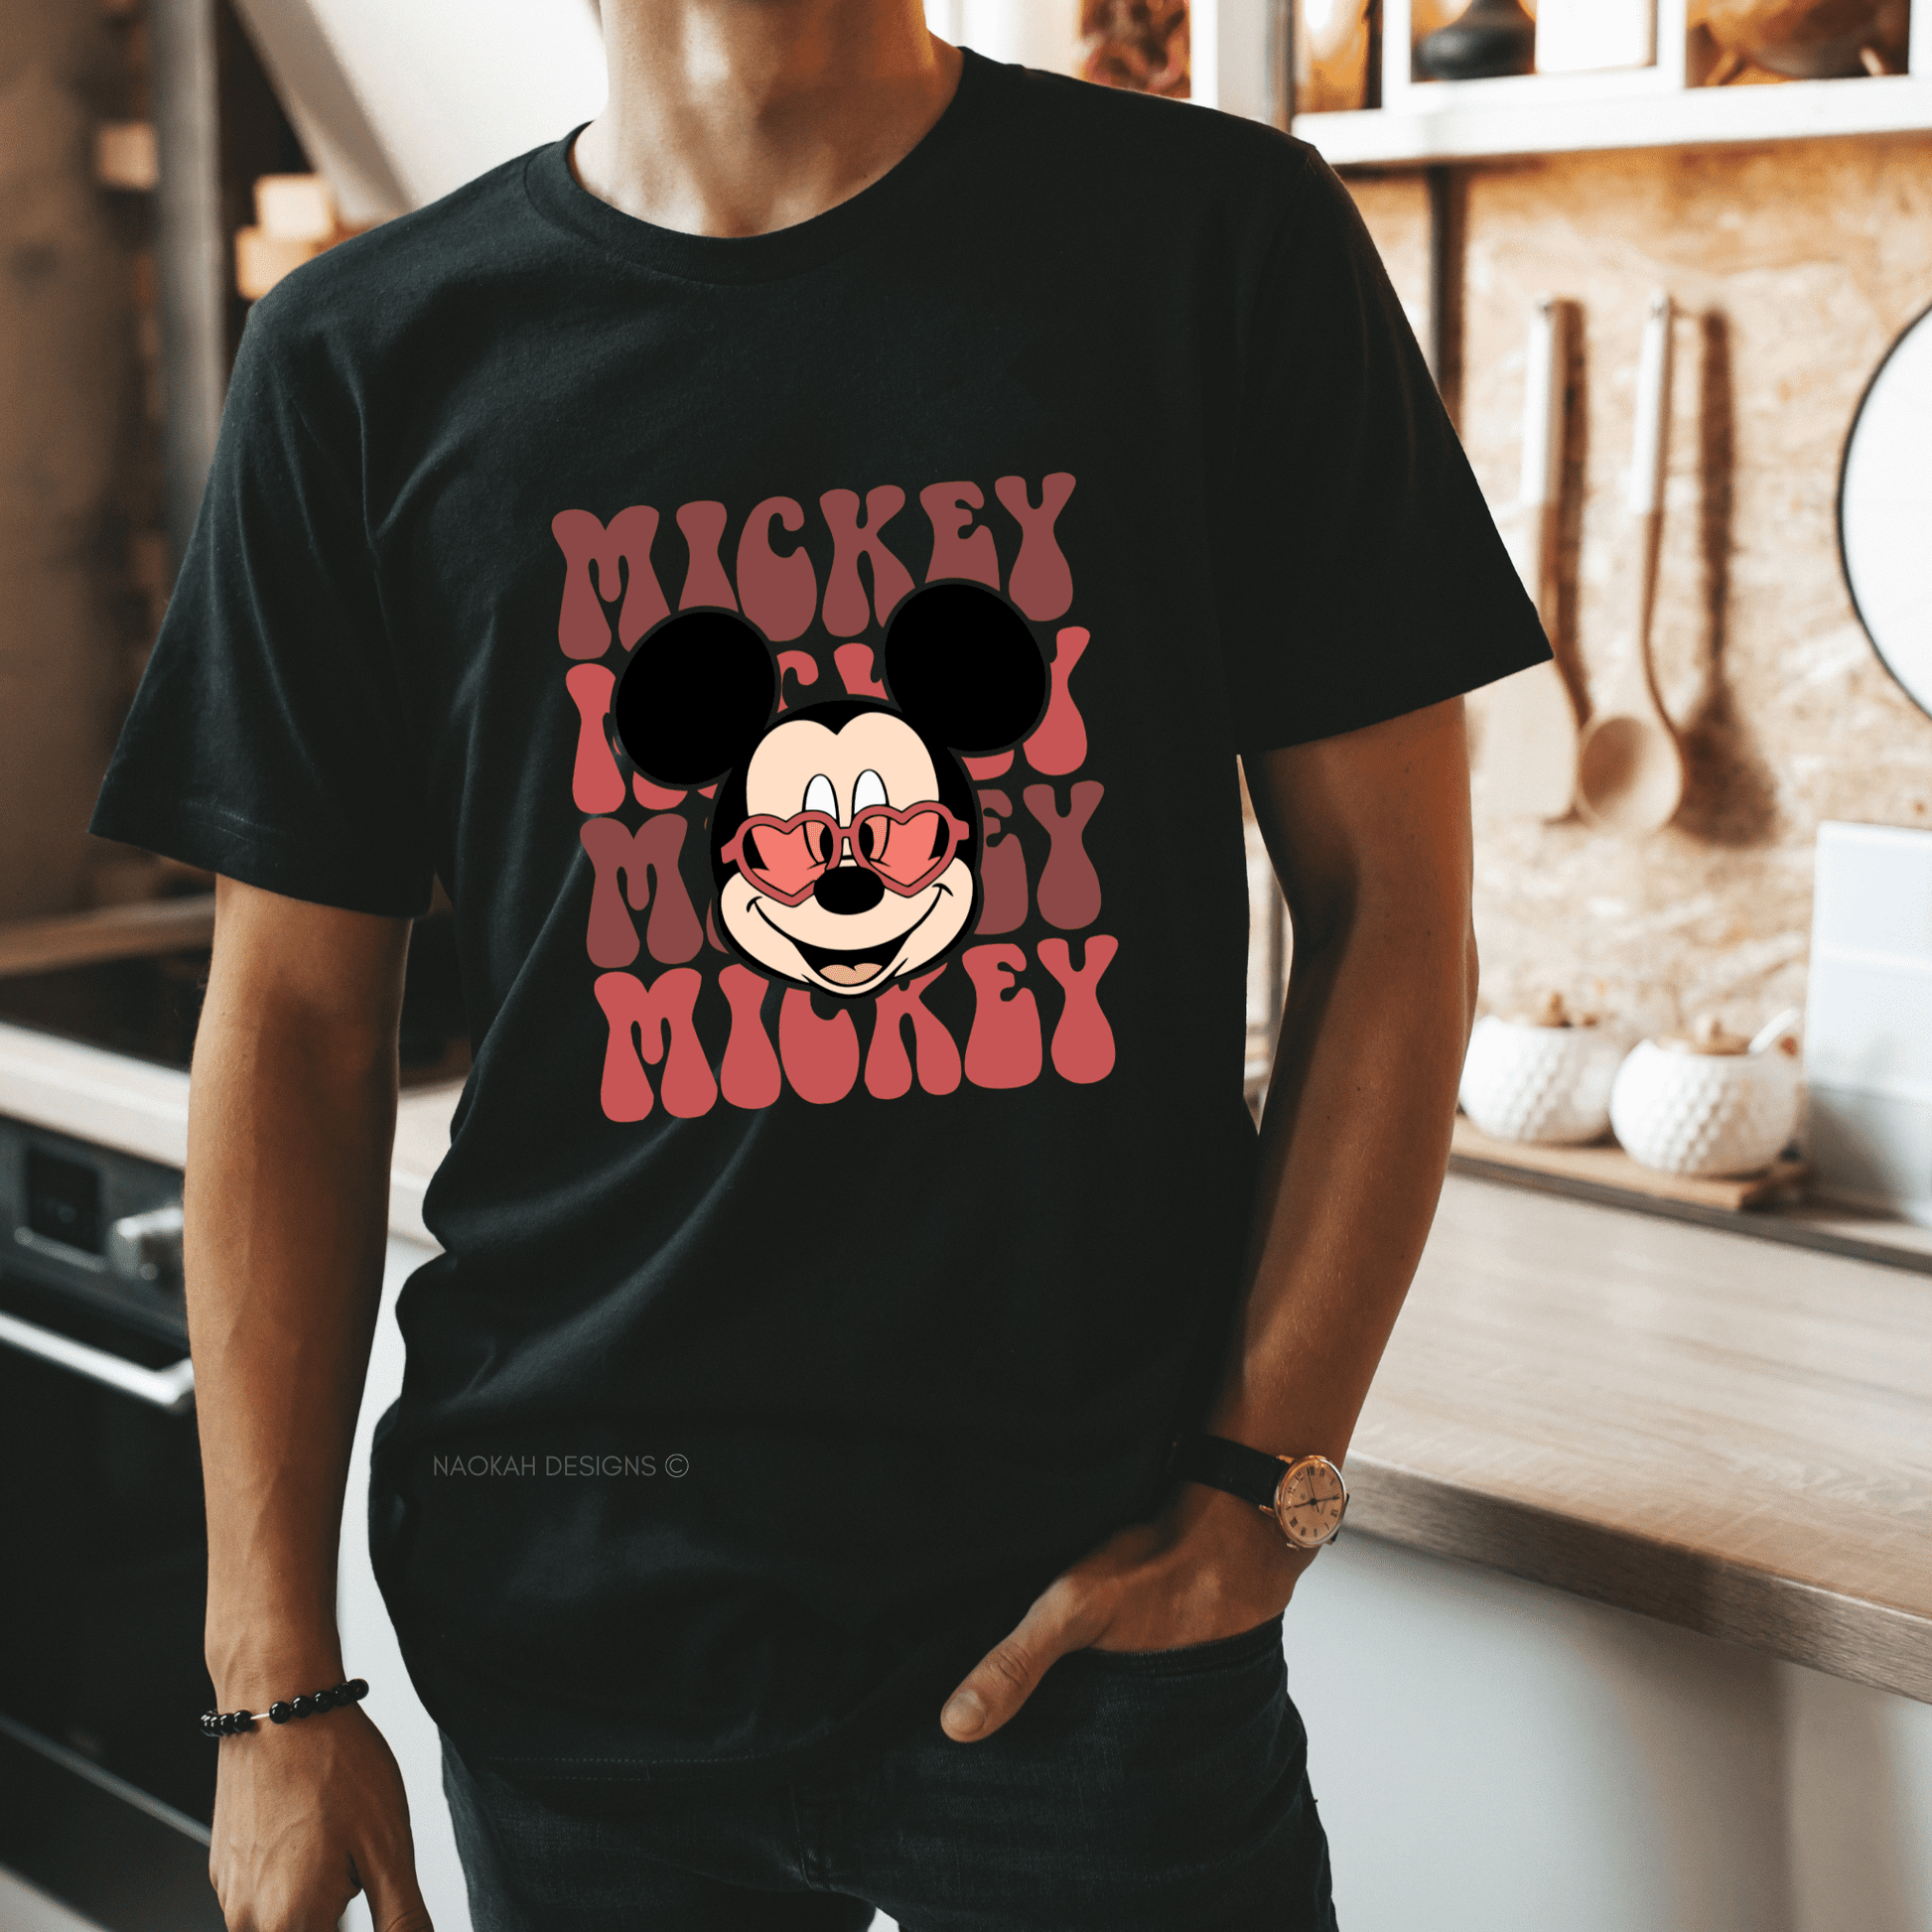 Retro Mouse Shirt, Retro Mickey Valentine Shirt,